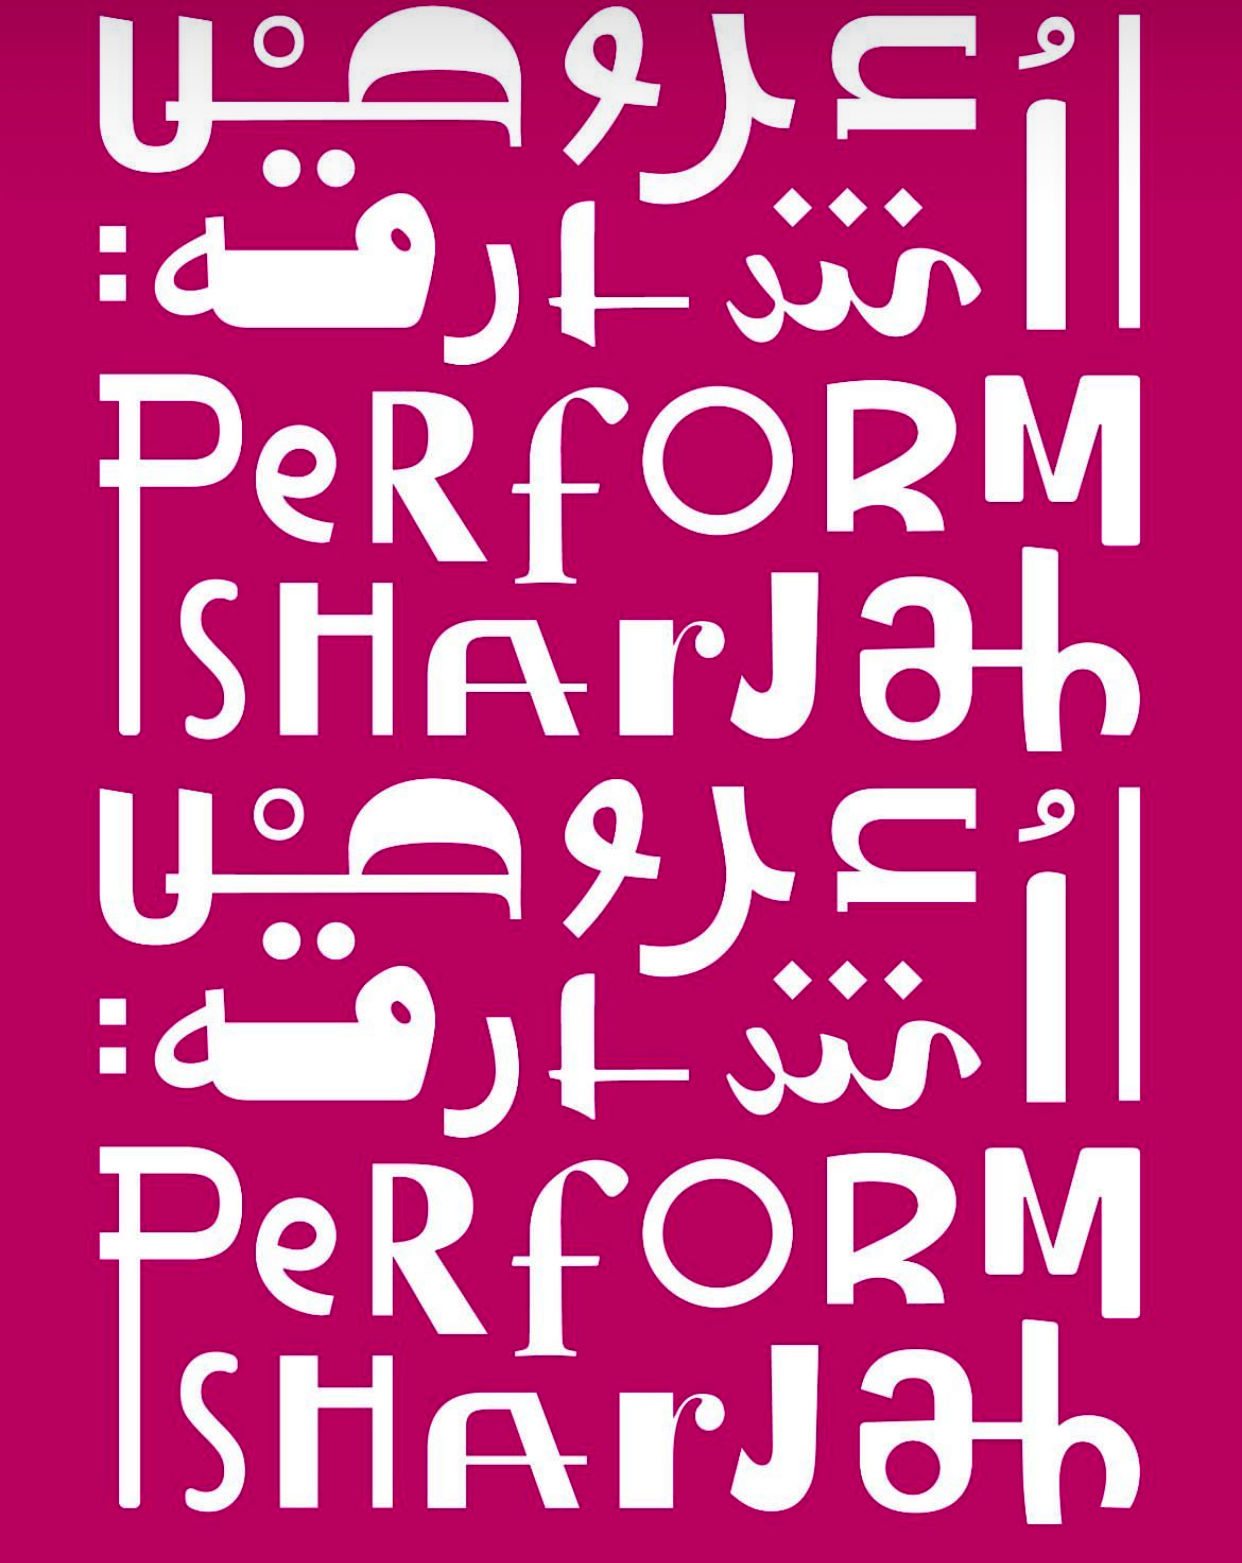 Sharjah Art Foundation will organize 8 Performances